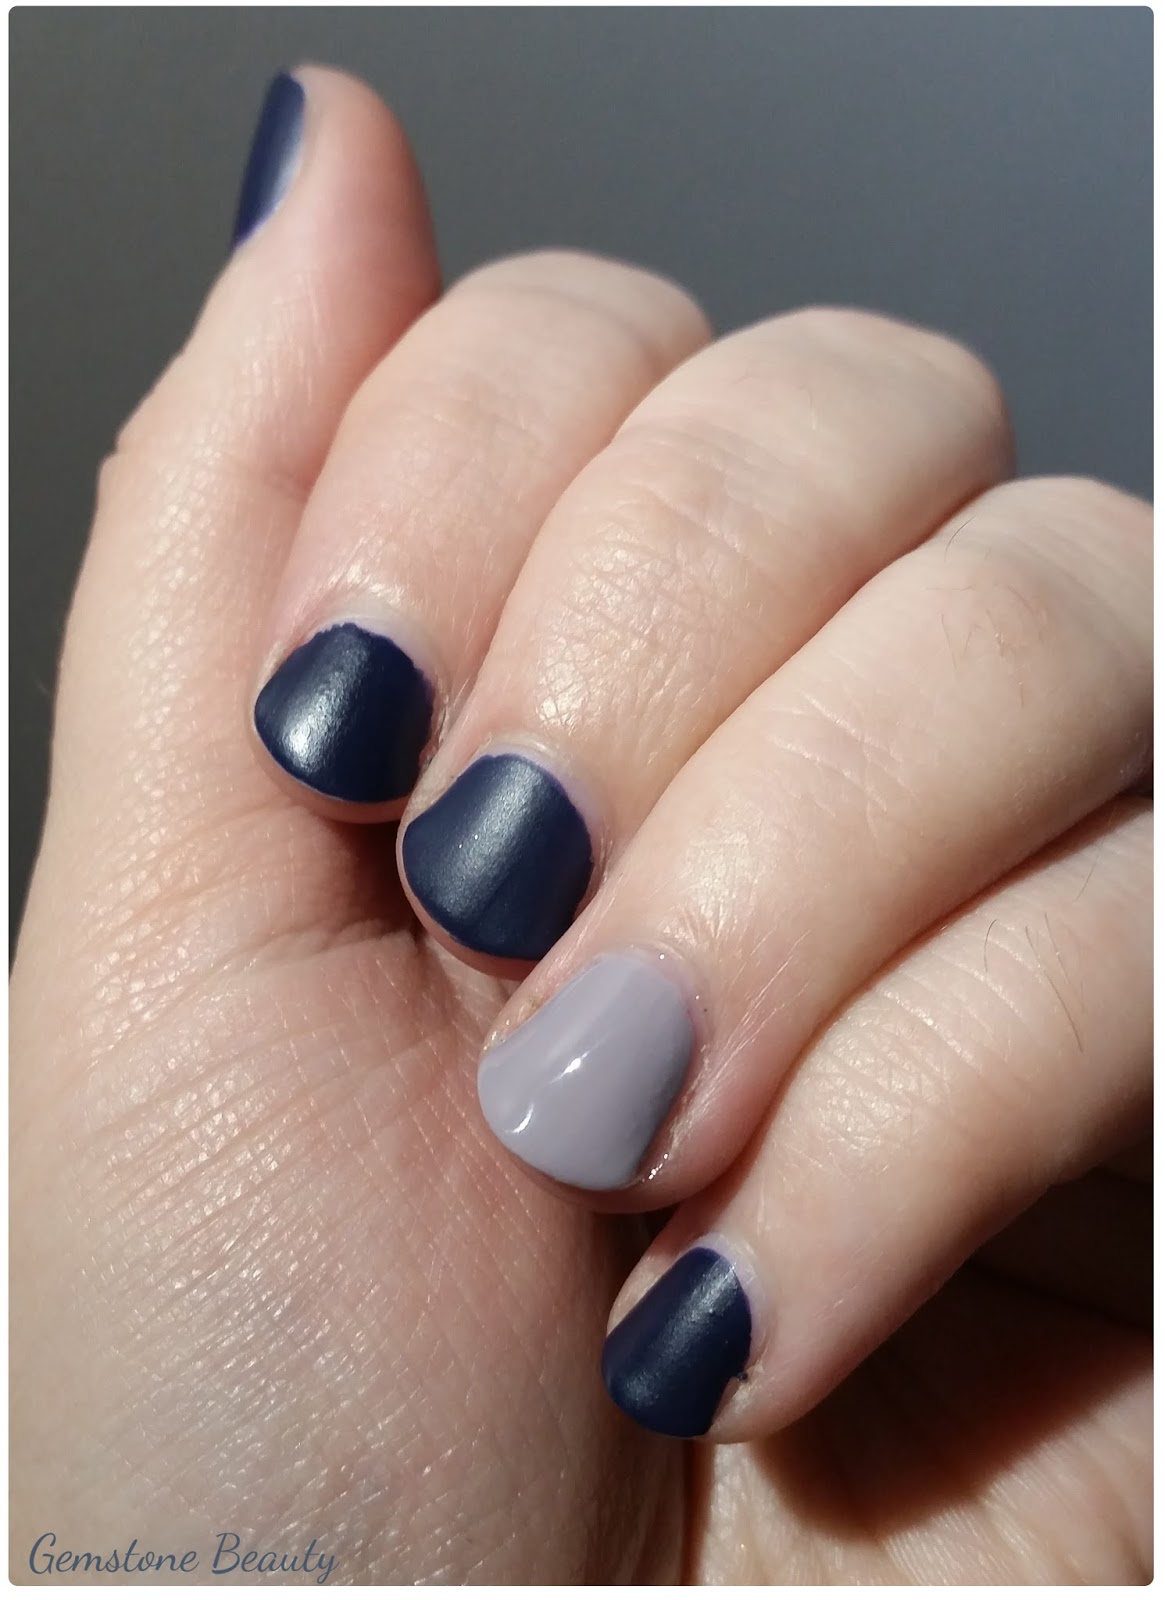 Gemstone Beauty: New essence the gel nail polish: Swatches ...